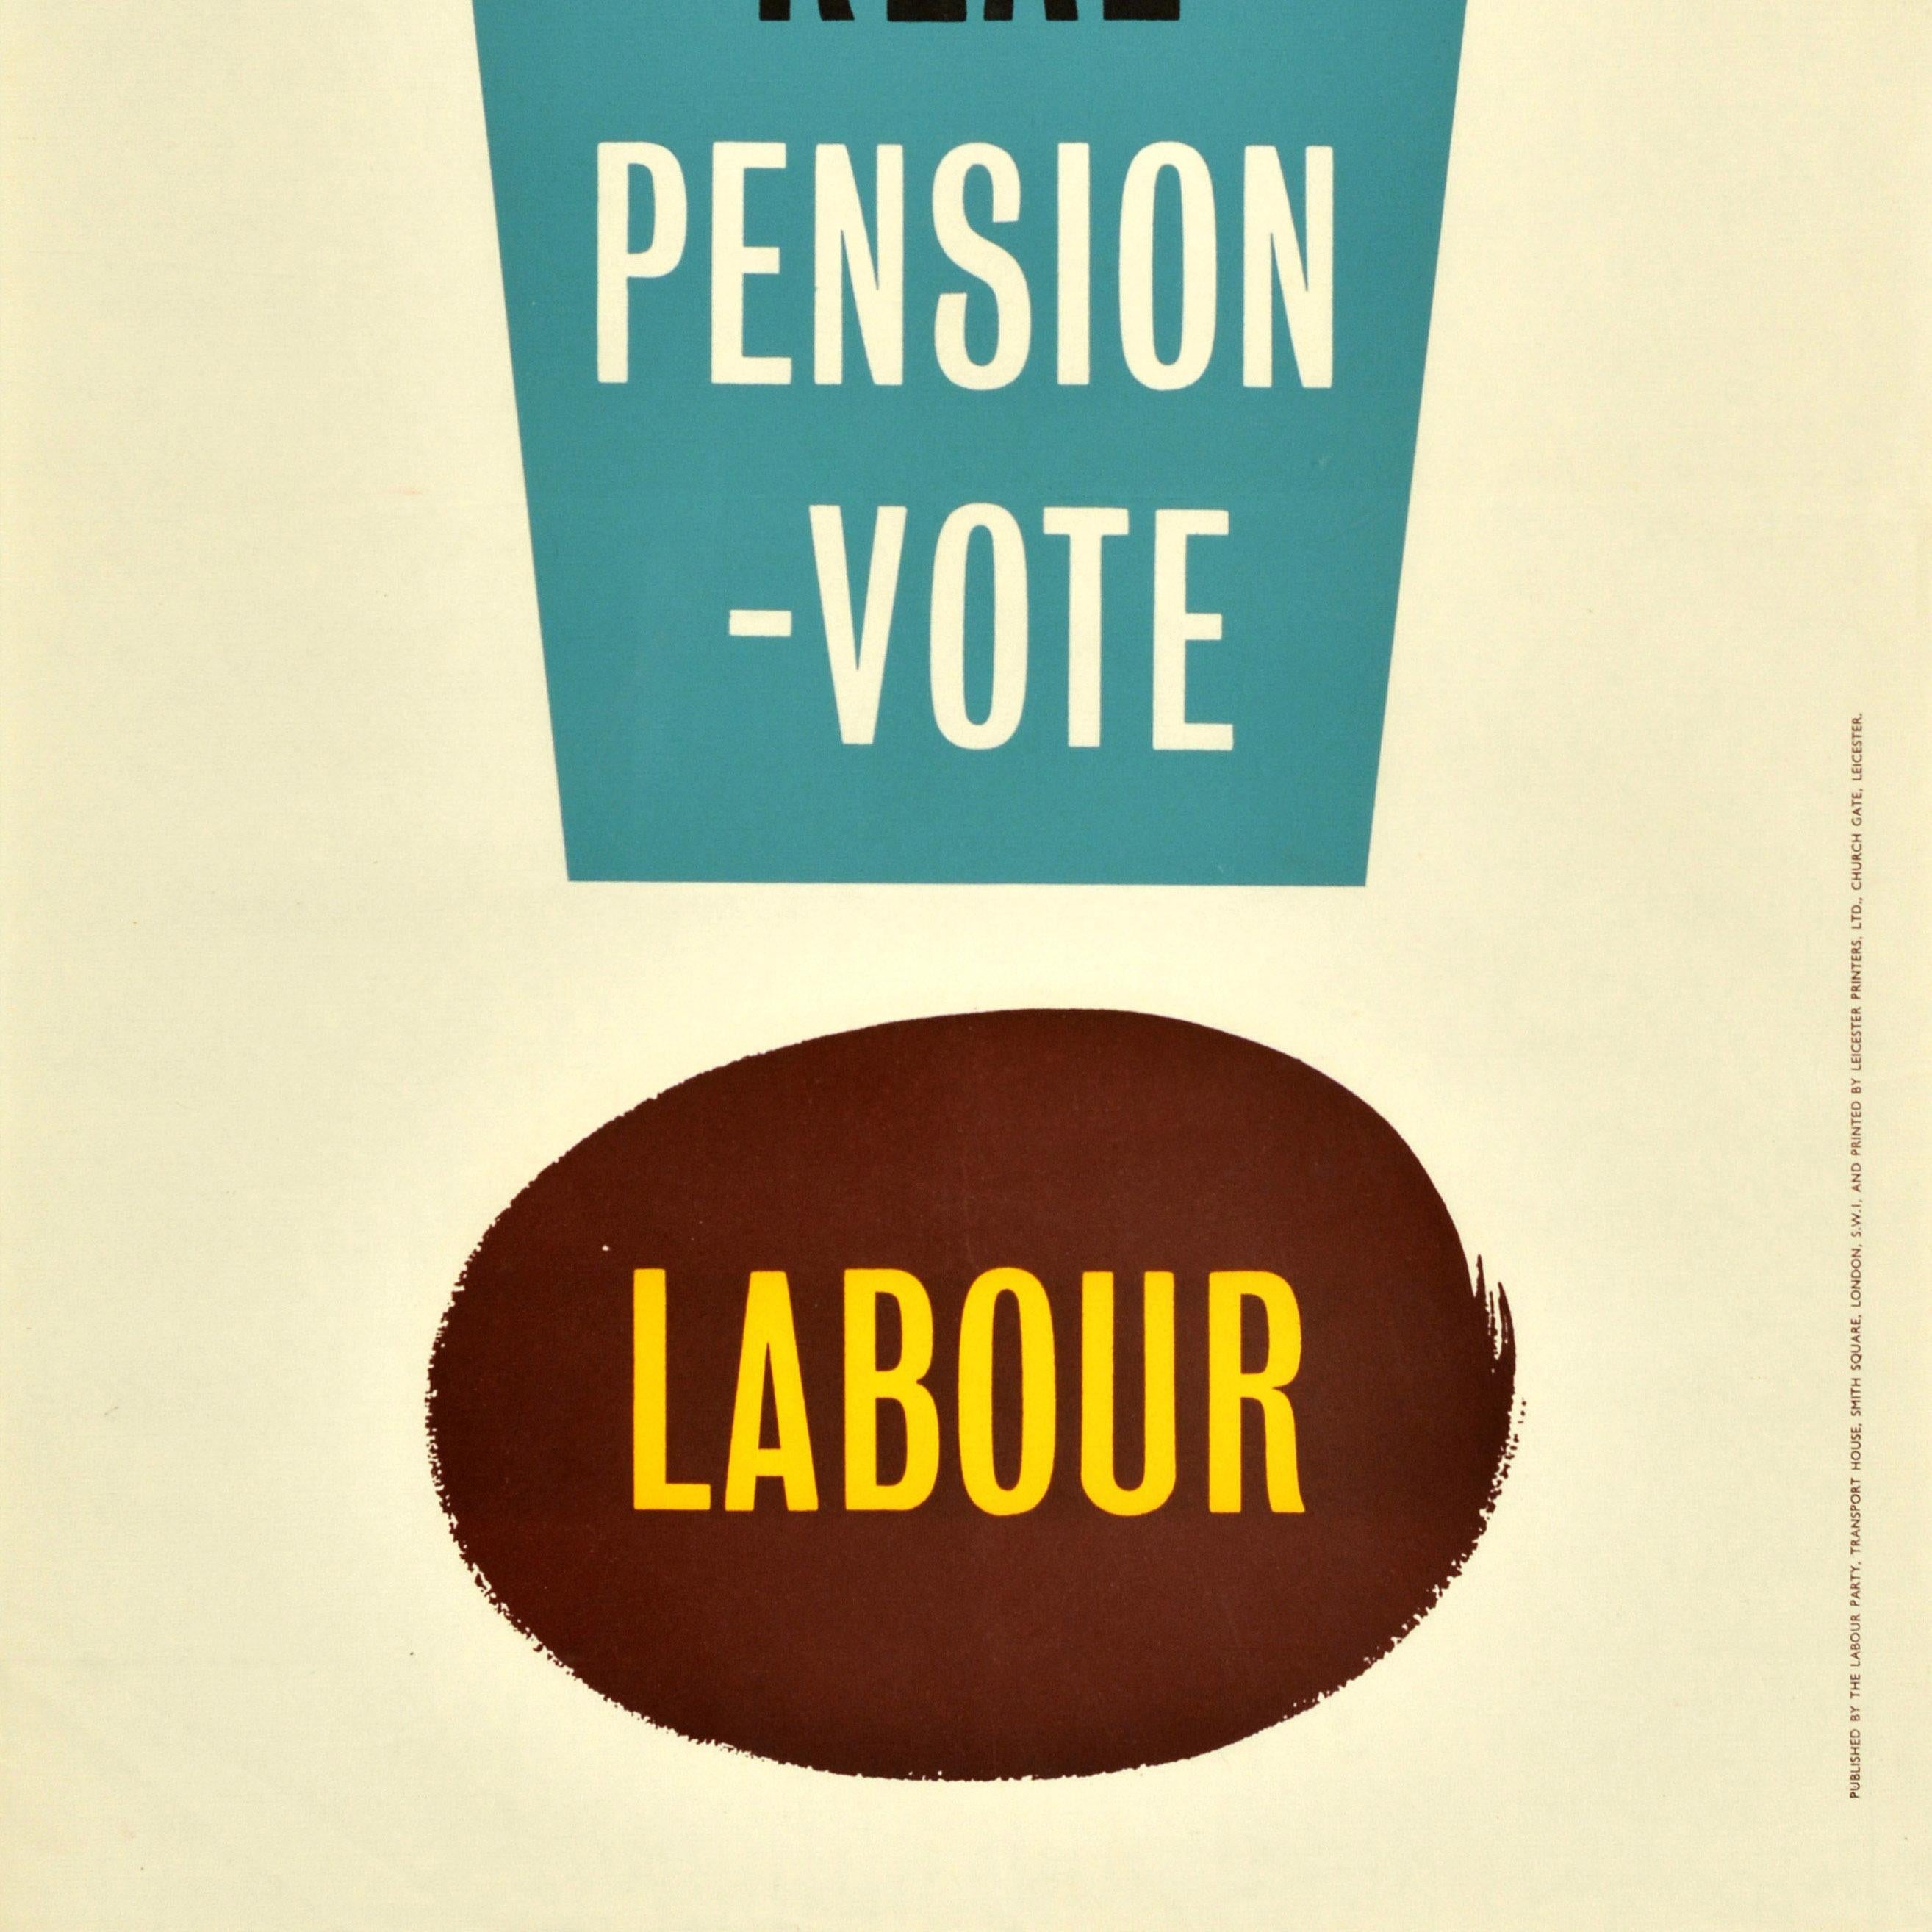 British Original Vintage Election Propaganda Poster Real Pension Vote Labour Party UK For Sale